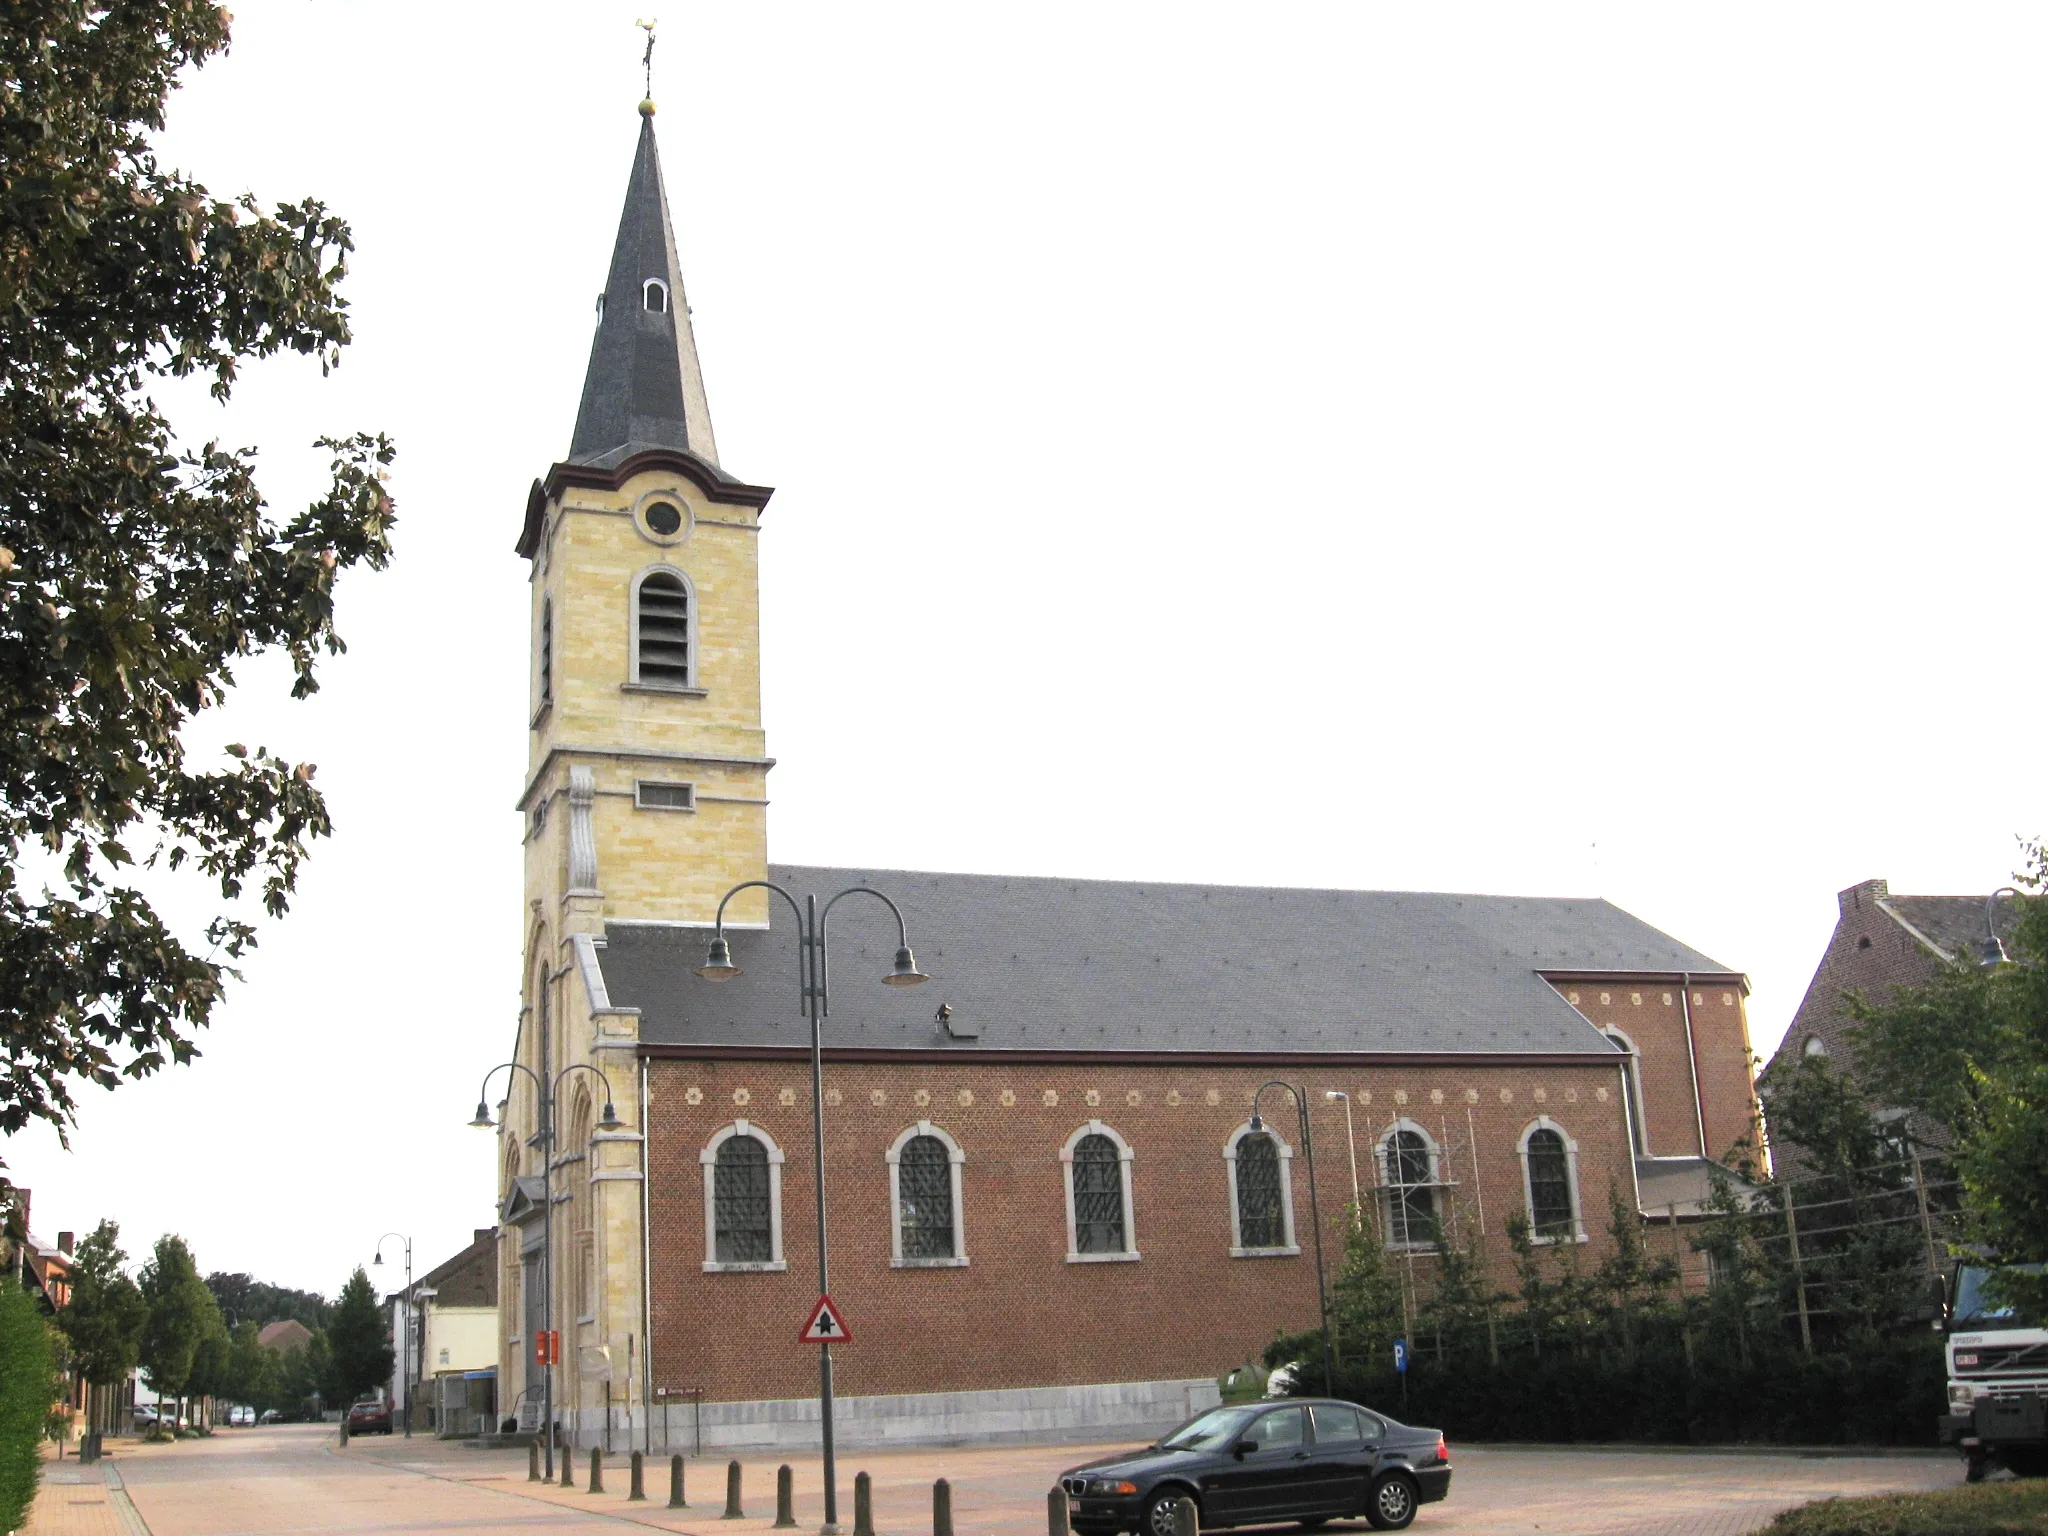 Photo showing: Church of Saint George in Jeuk, Gingelom, Limburg, Belgium